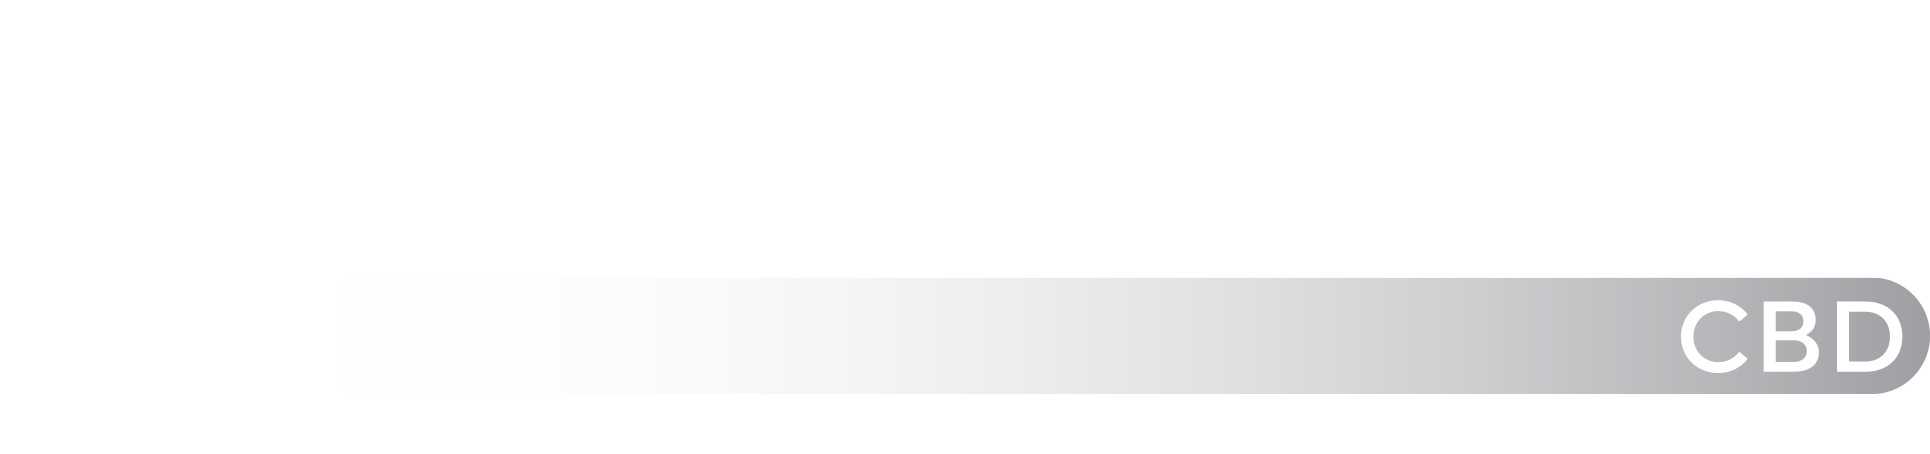 https://pccbd.com/wp-content/uploads/2020/05/the-physicians-choice-logo-reverse-rgb.png